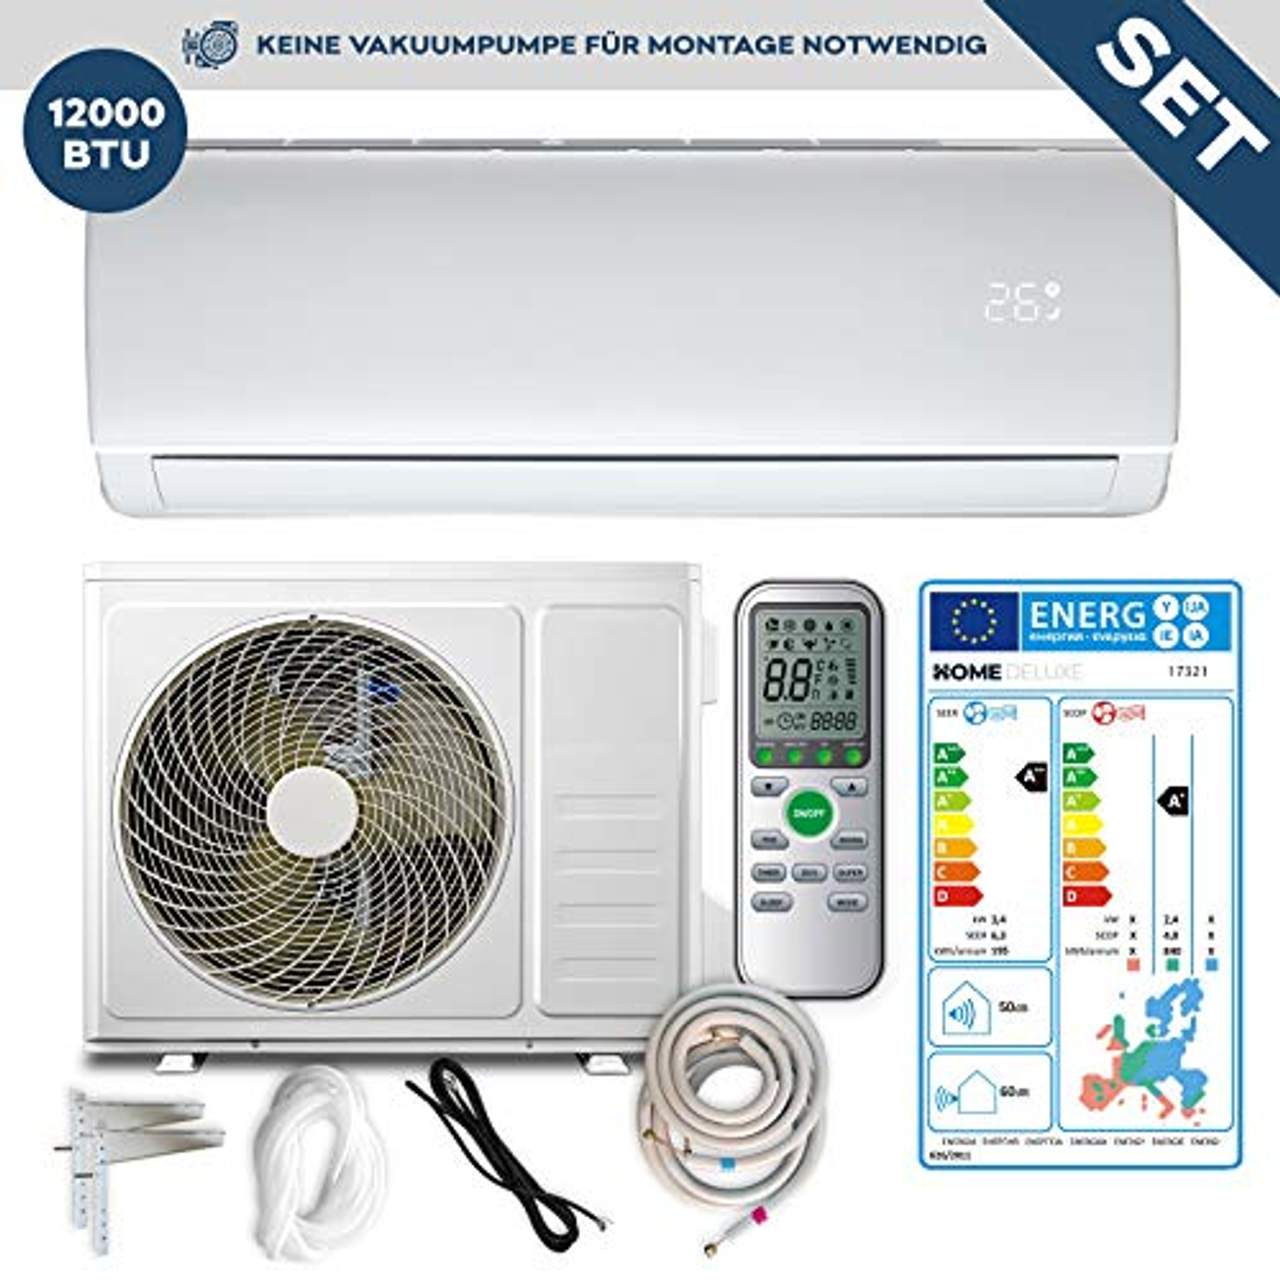 Home Deluxe Klimaanlage Set SPLIT 12-12000 BTU/h